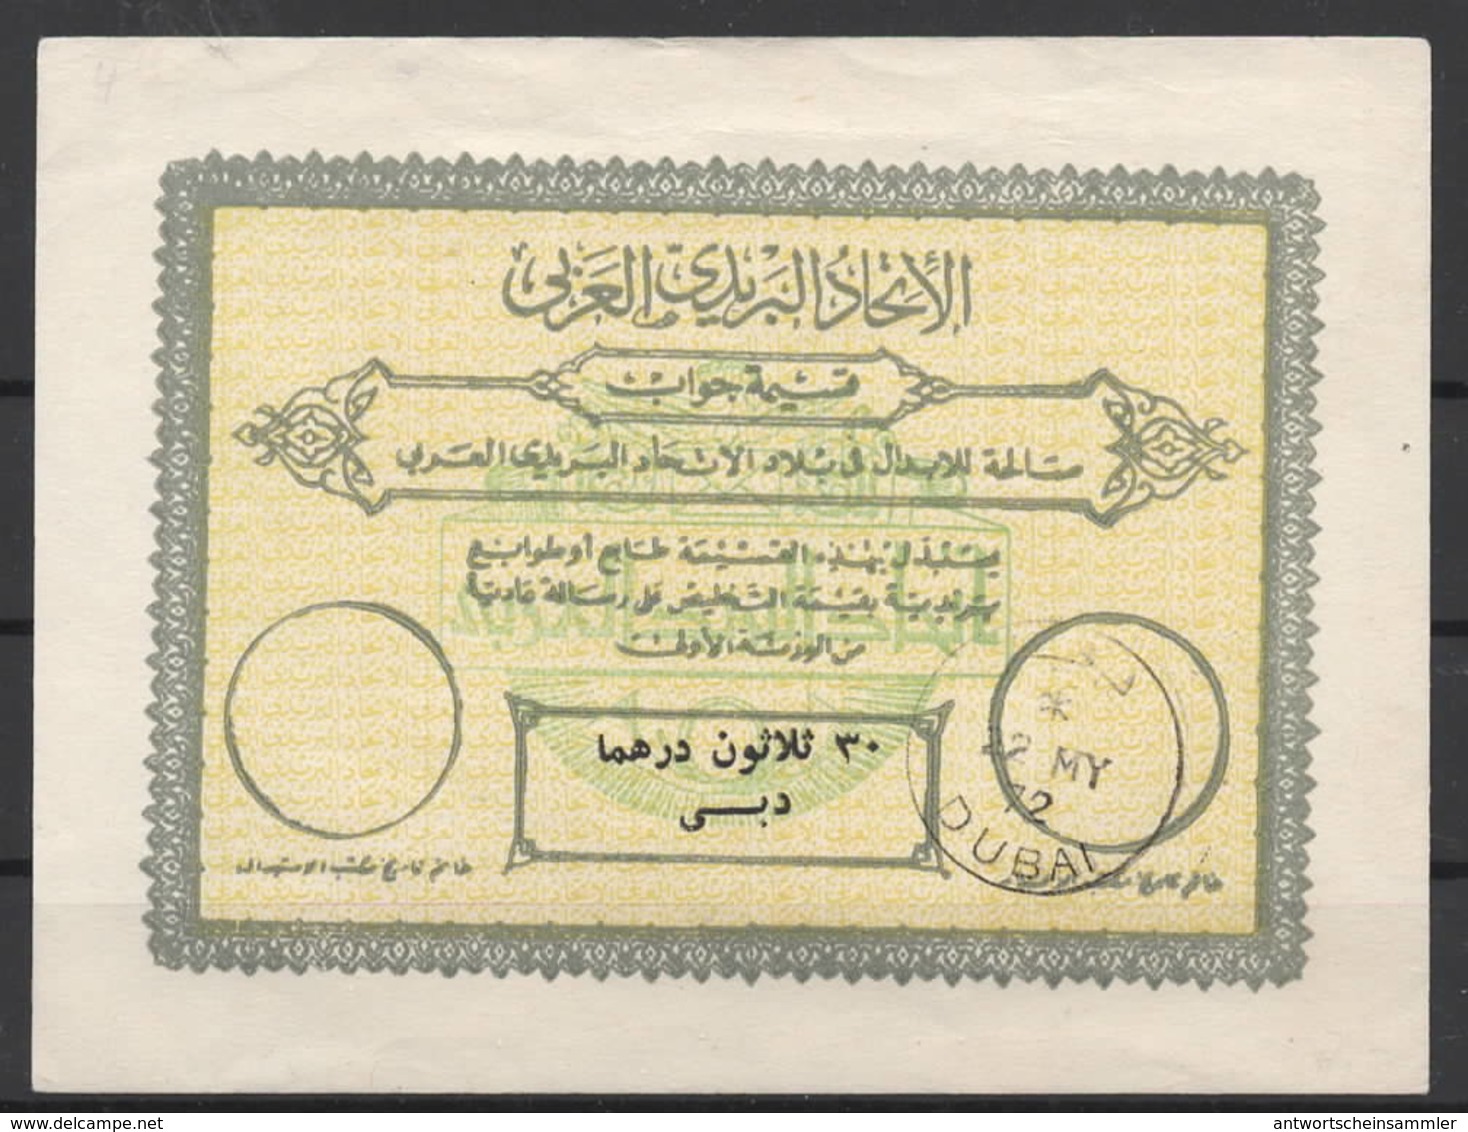 DUBAI 1972 / Emirats Arabes / United Arab Emirates Arab Postal Union Reply Coupon Reponse Antwortschein O DUBAI 22.05.72 - Dubai